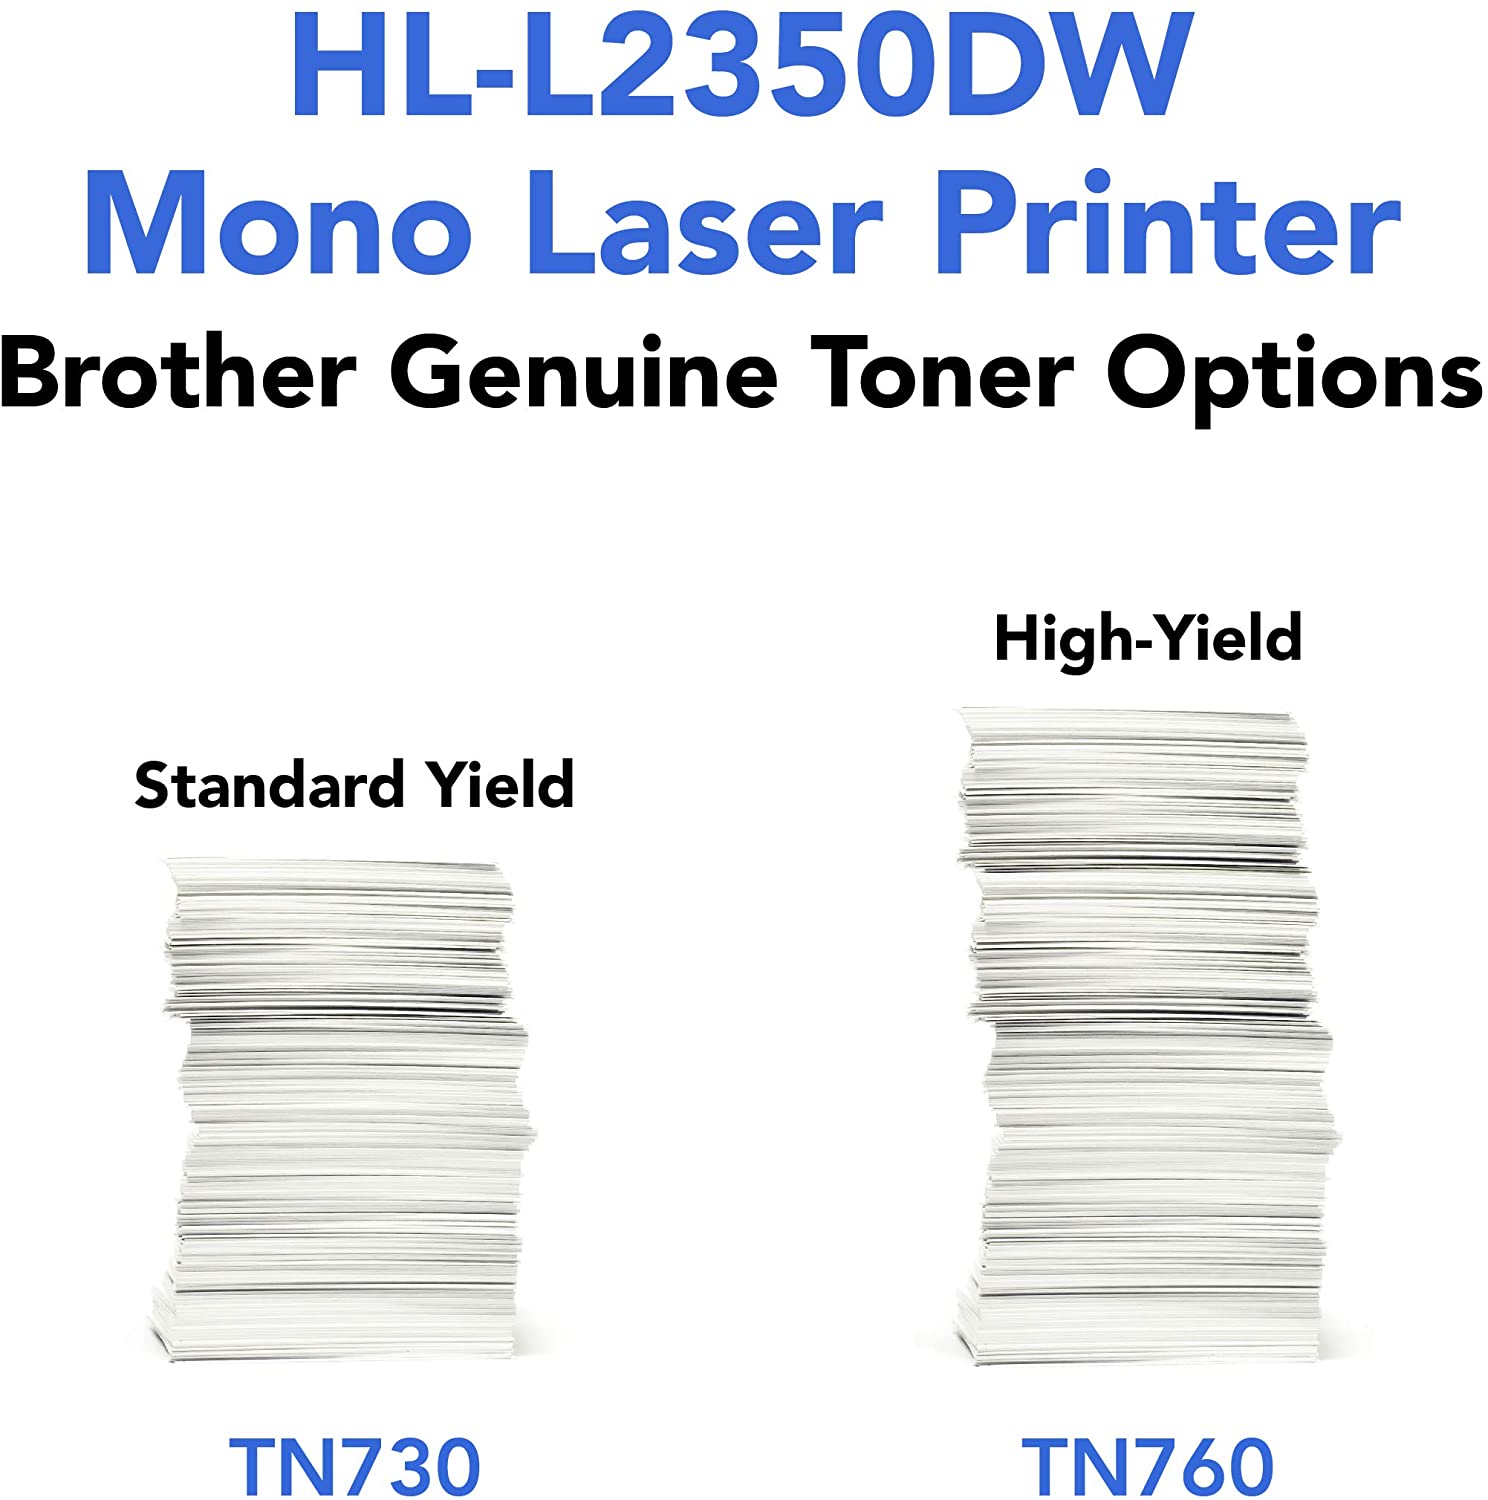 Brother HL-L2350DW Compact Black & White Laser Printer